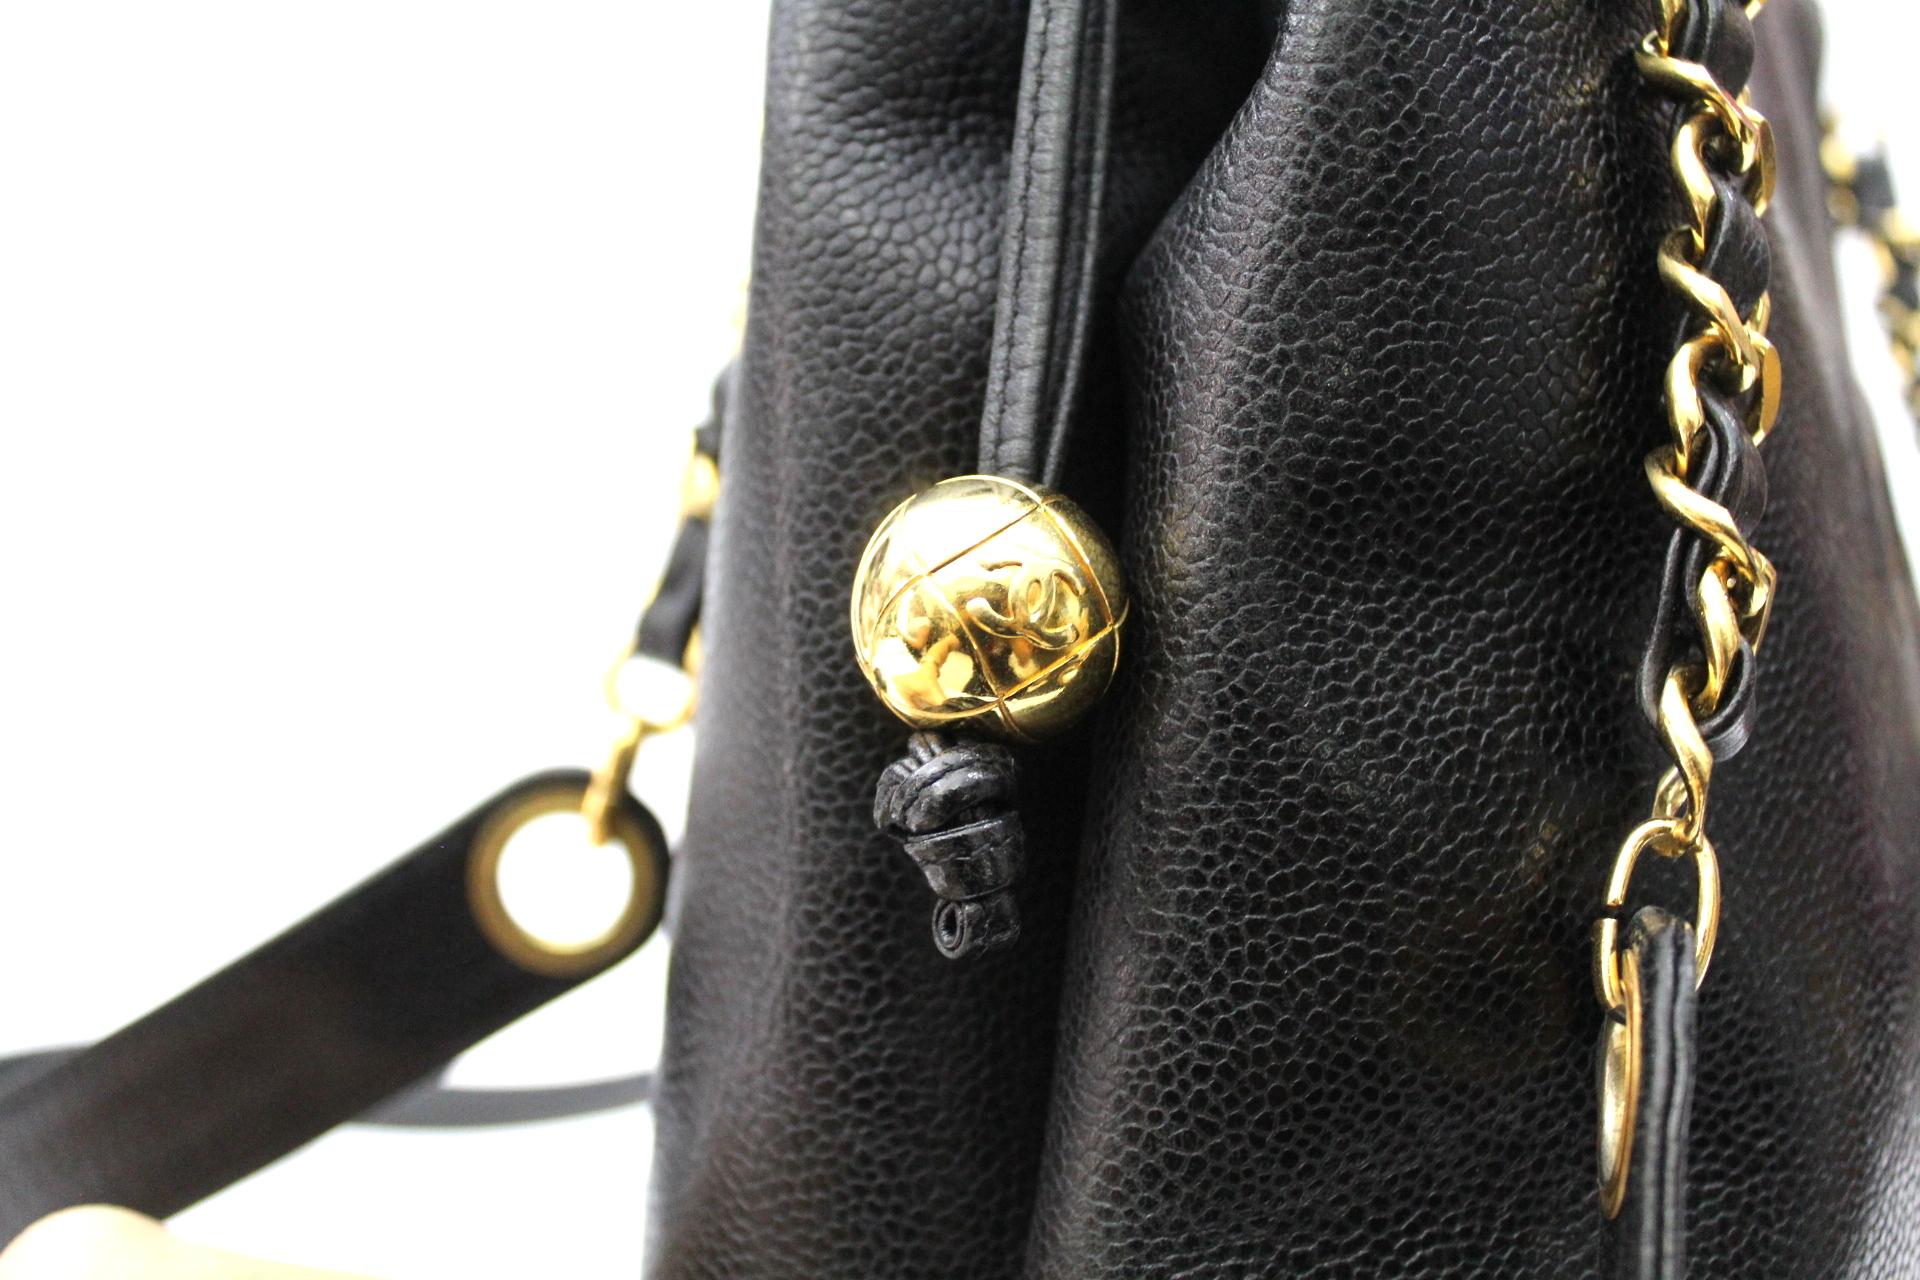 1992s Chanel Black Cavier Leather Shopping Bag (Schwarz)